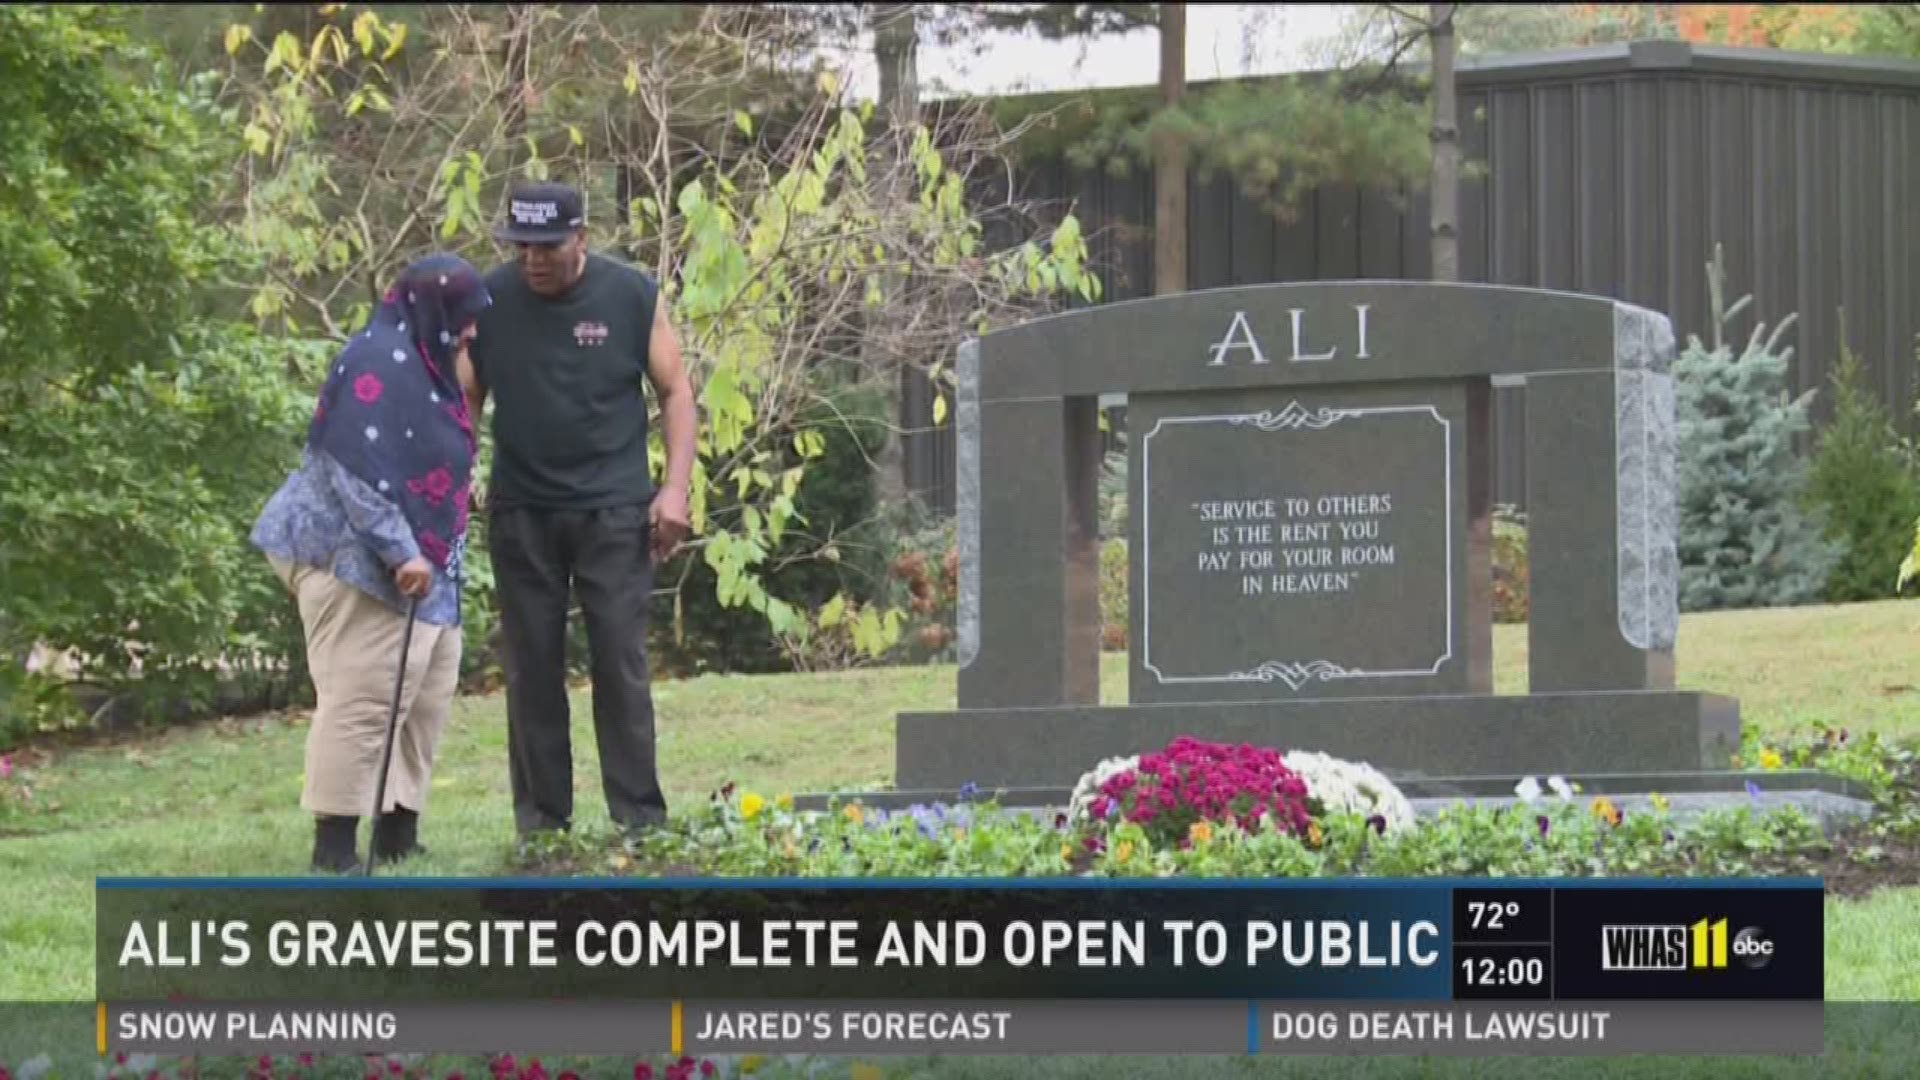 Ali's gravesite complete and open to the public